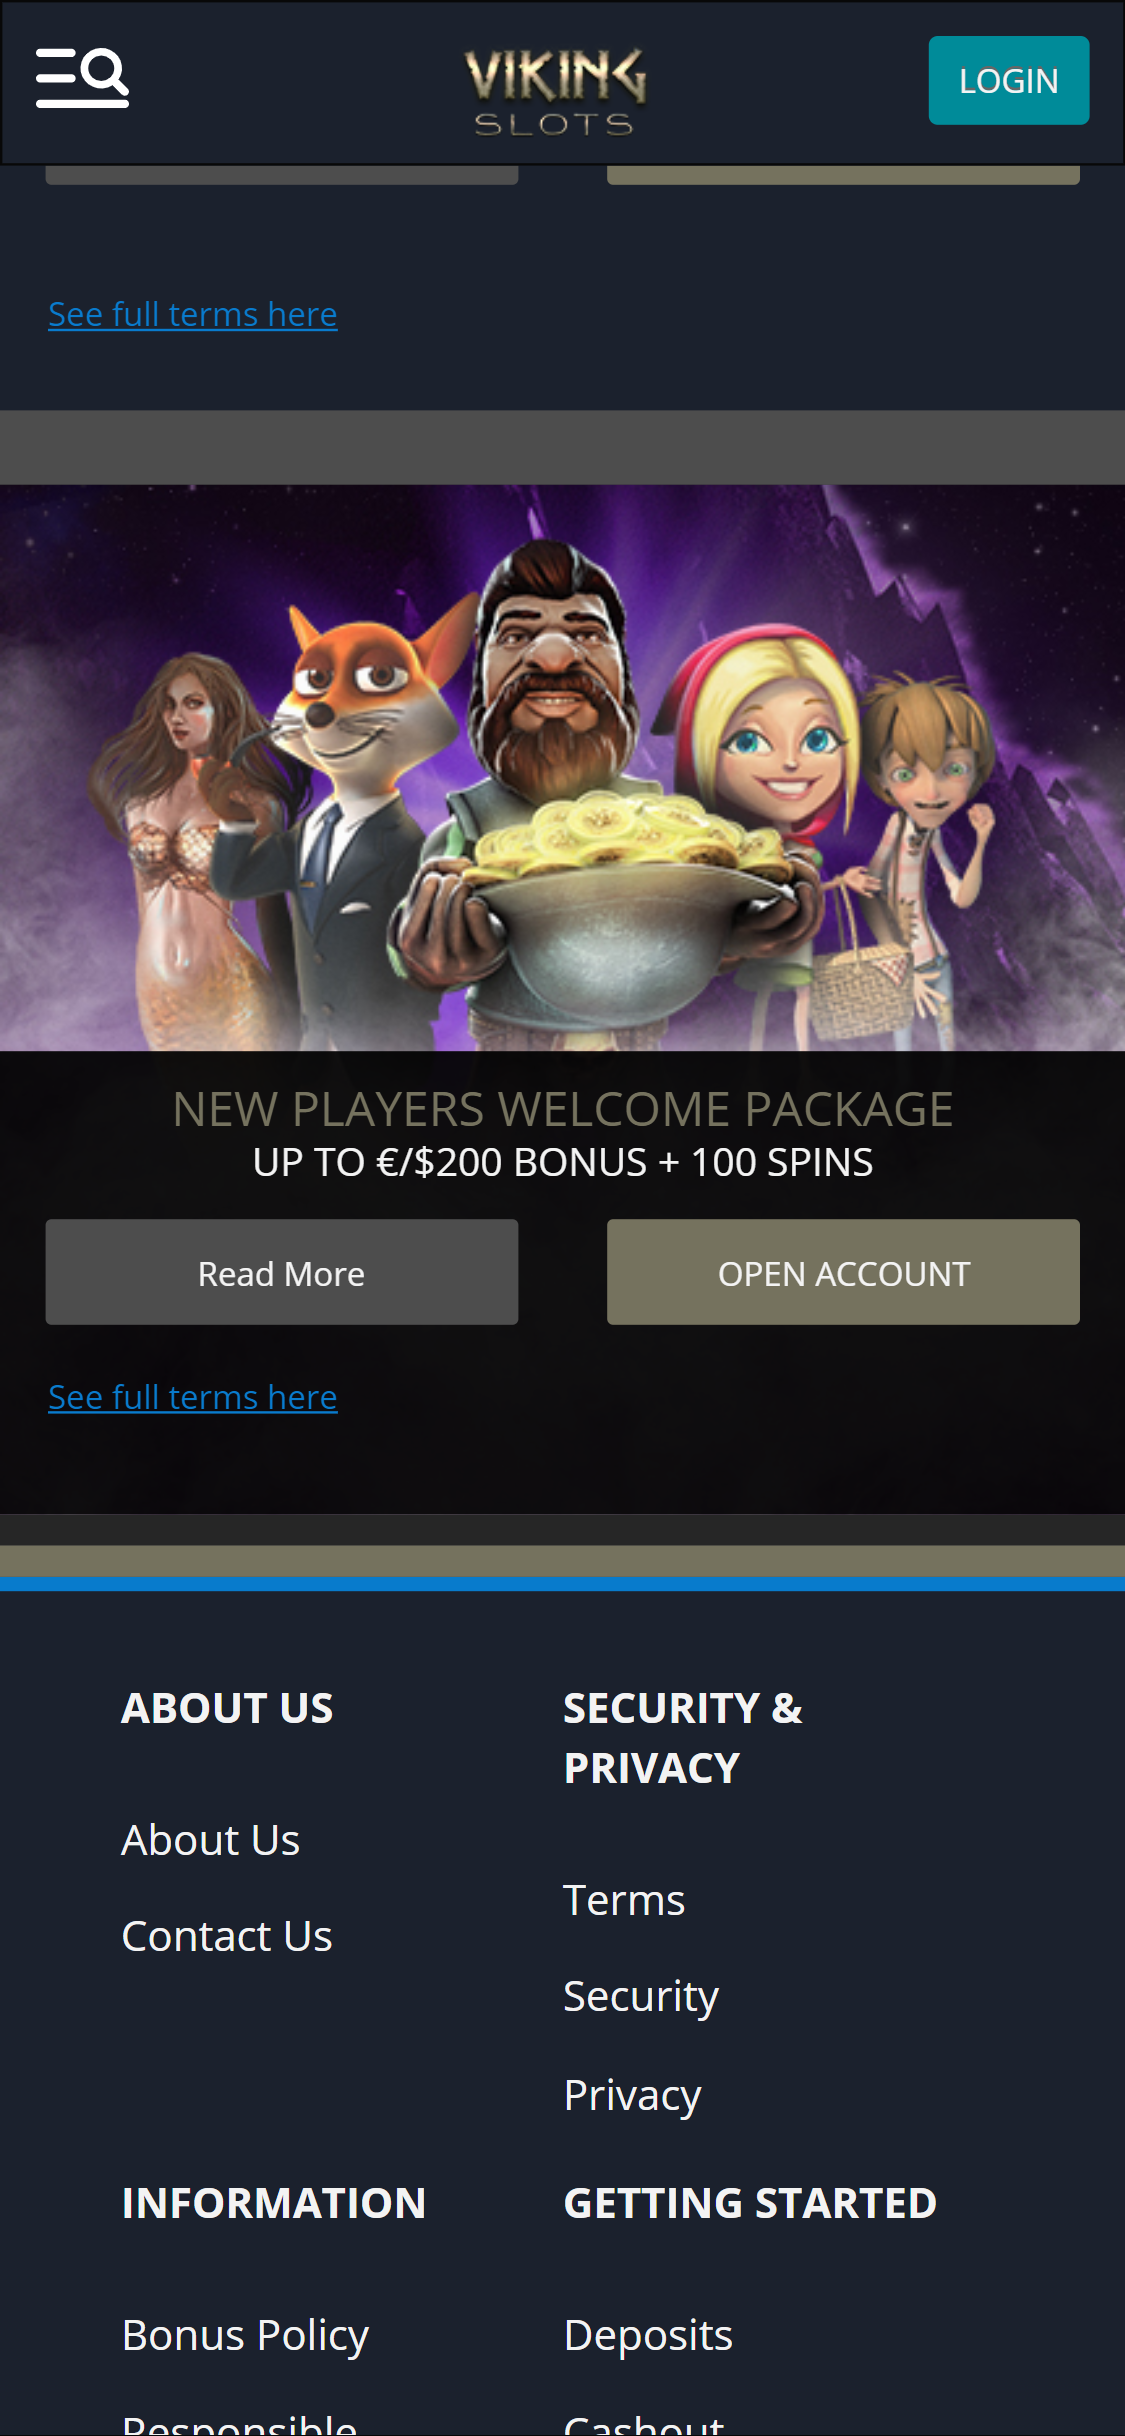 Viking Slots Casino Mobile No Deposit Bonus Review